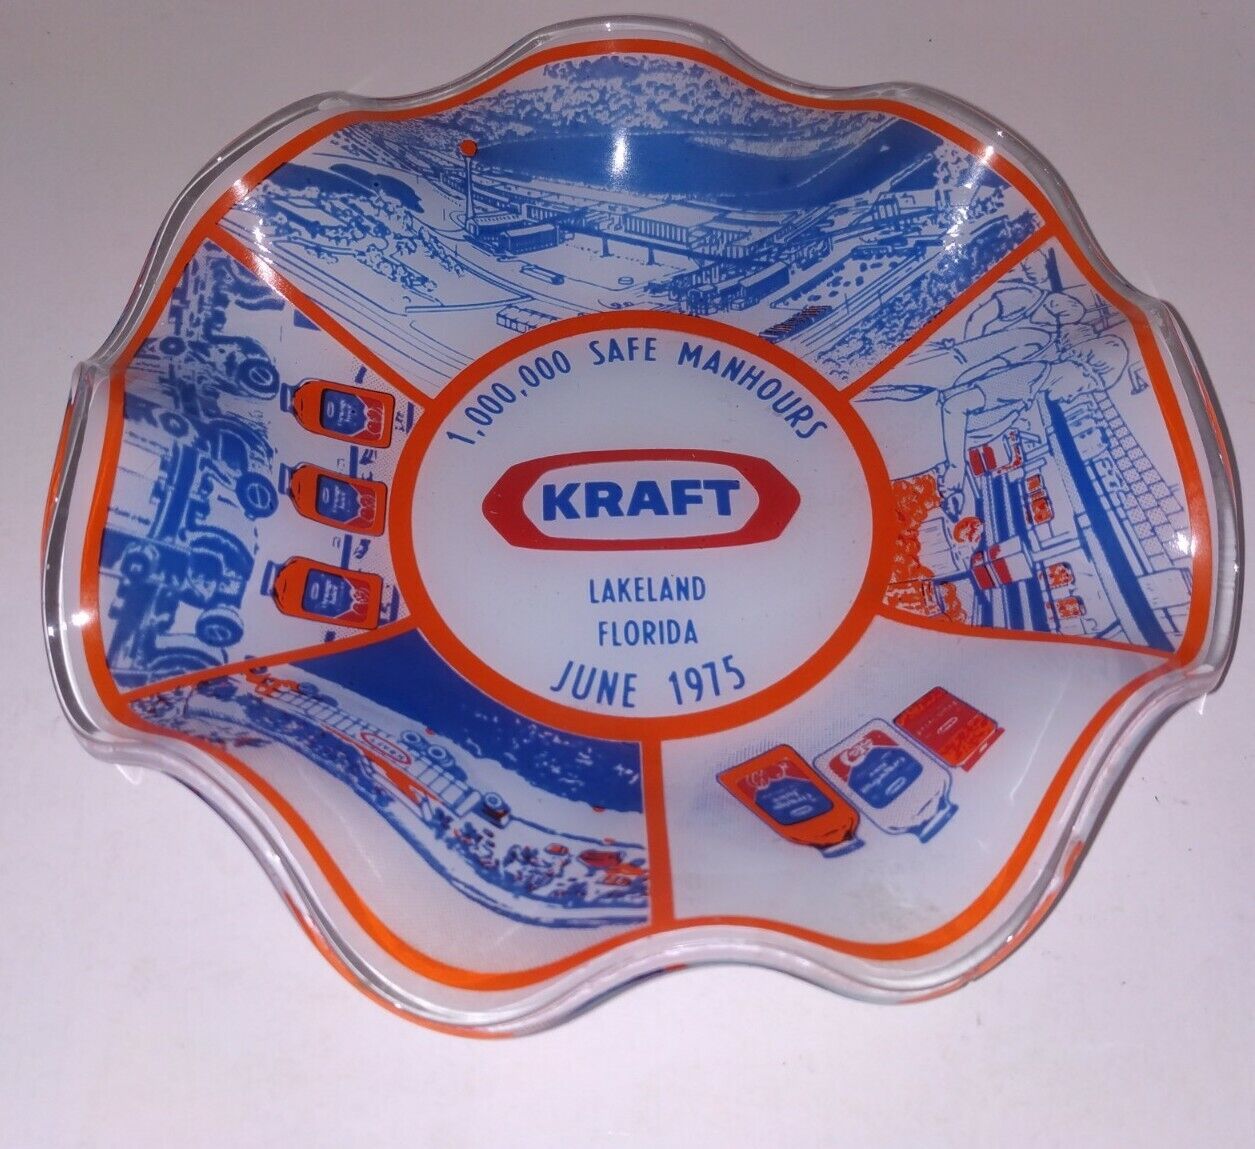 Kraft Glass Plate Ashtray 1,000,000 Safe Manhours Lakeland Florida June 1975 vtg